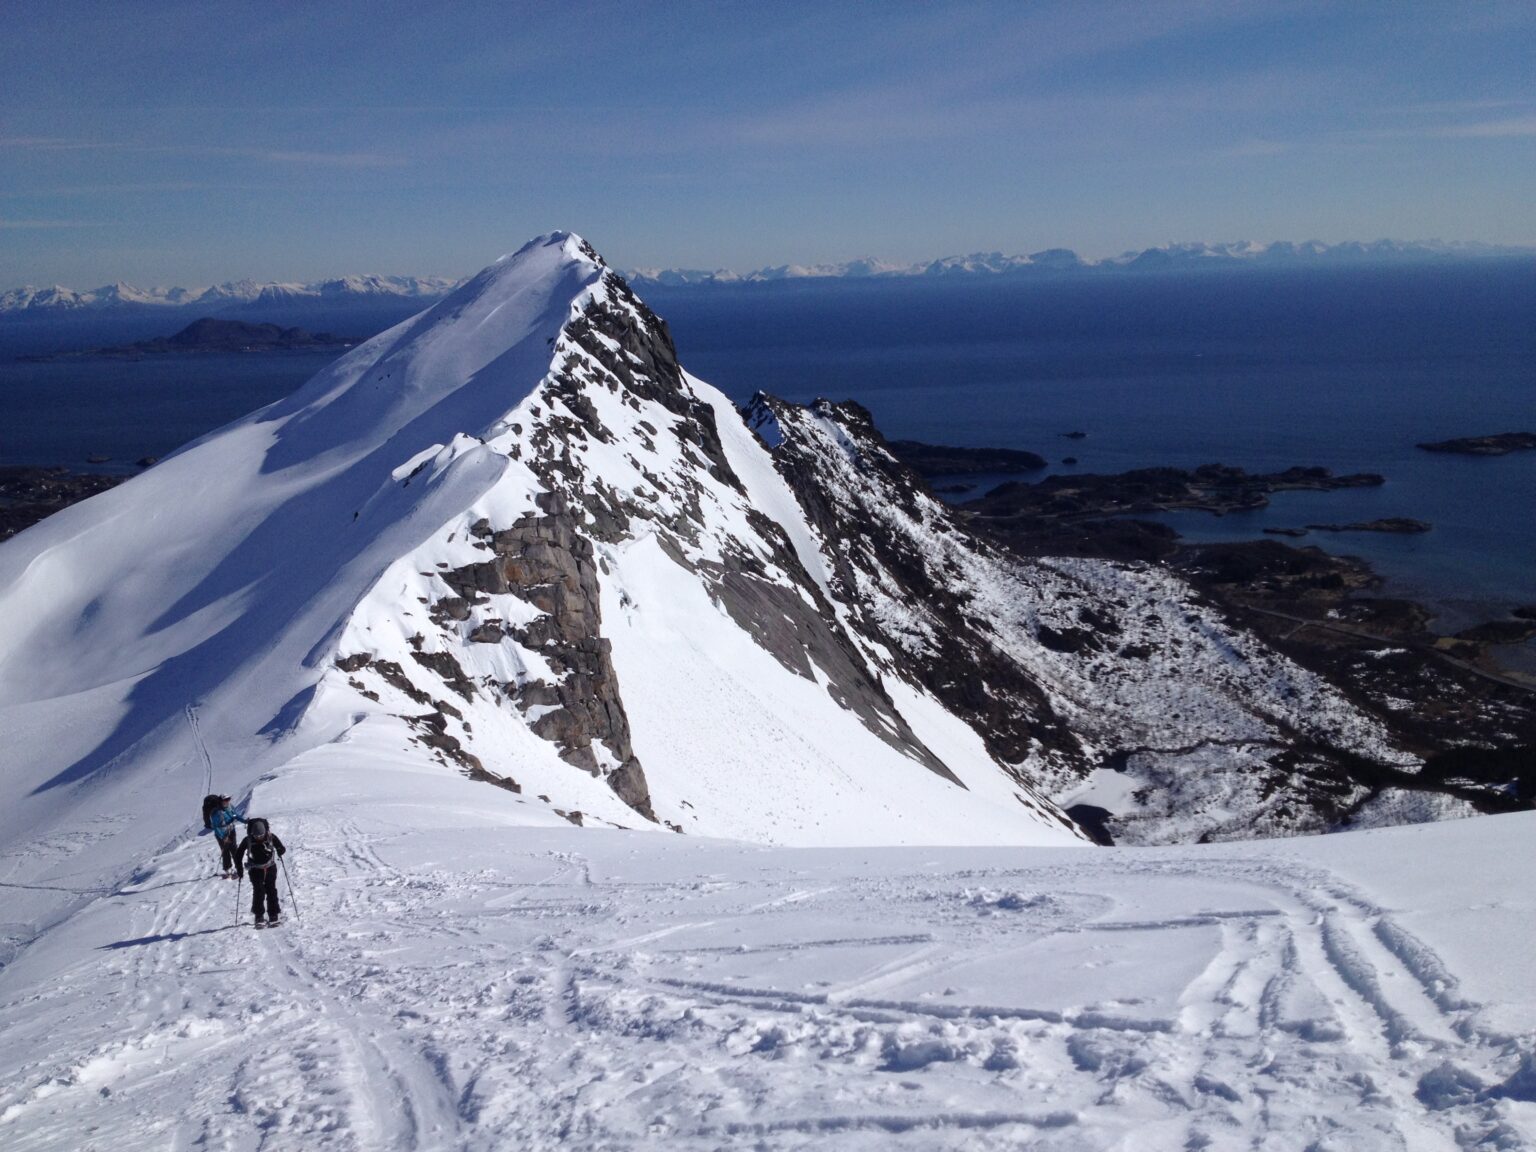 Ski touring towards the summit of Fløya Peak